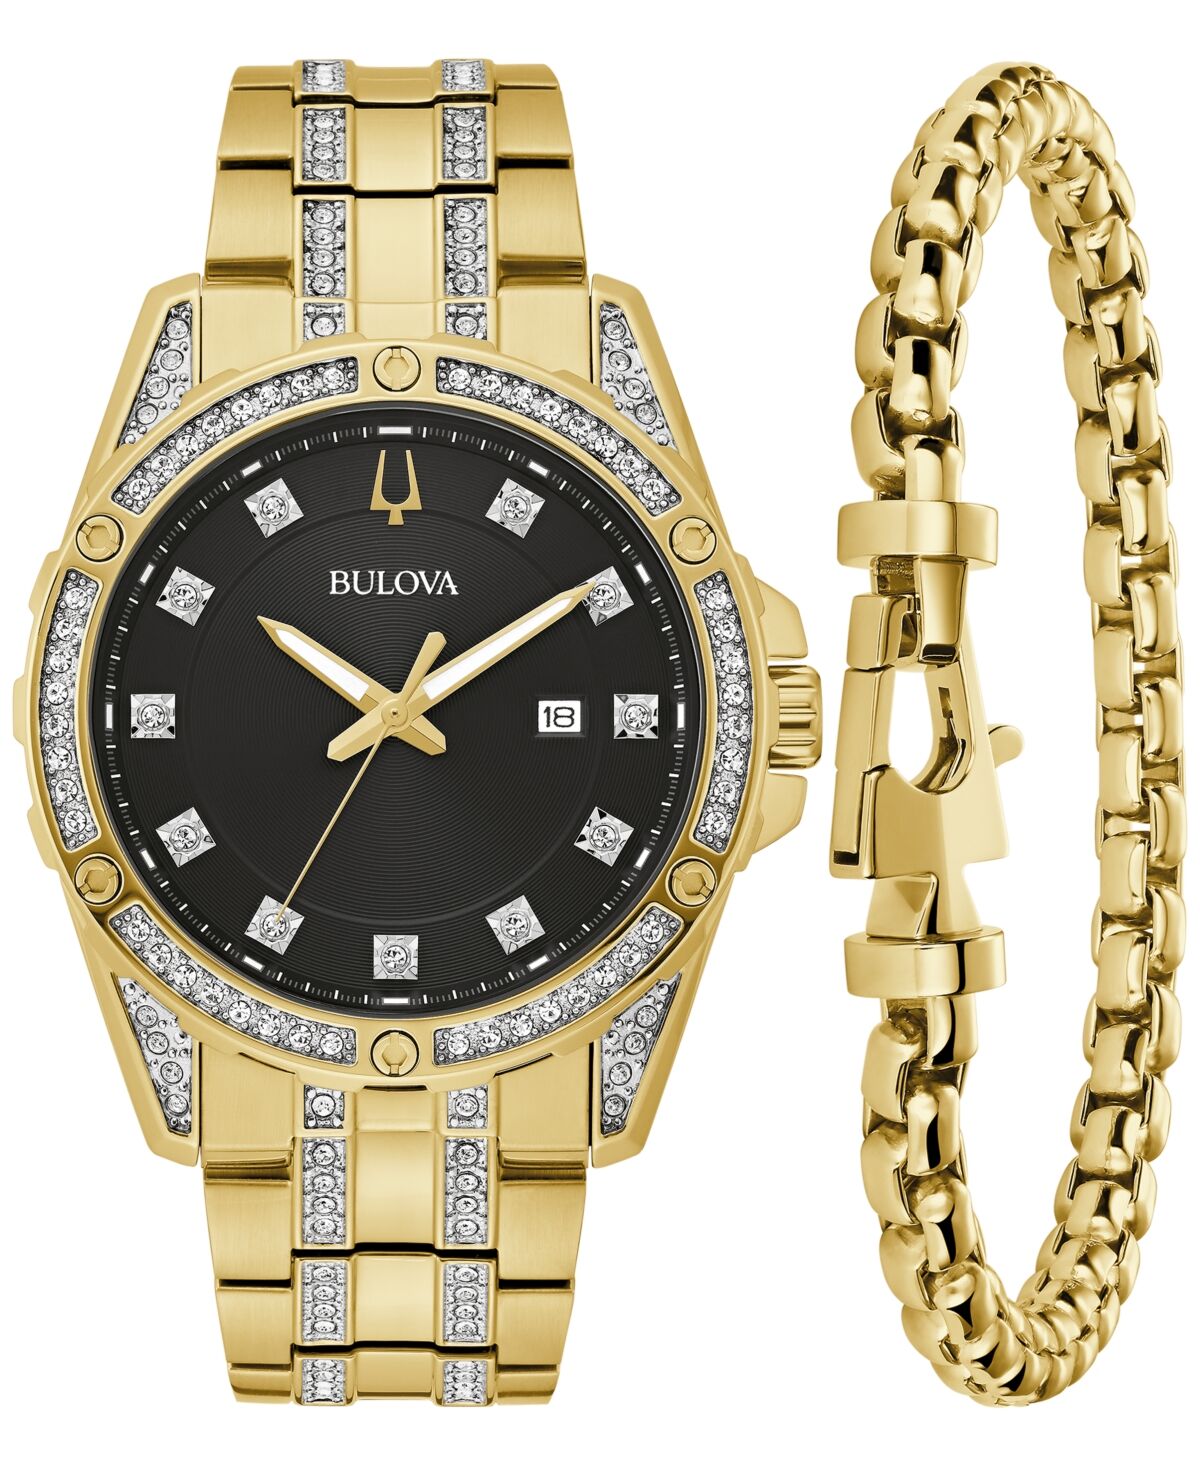 Bulova Men's Classic Crystal Gold-Tone Stainless Steel Bracelet Watch Box Set 43mm - Two Tone